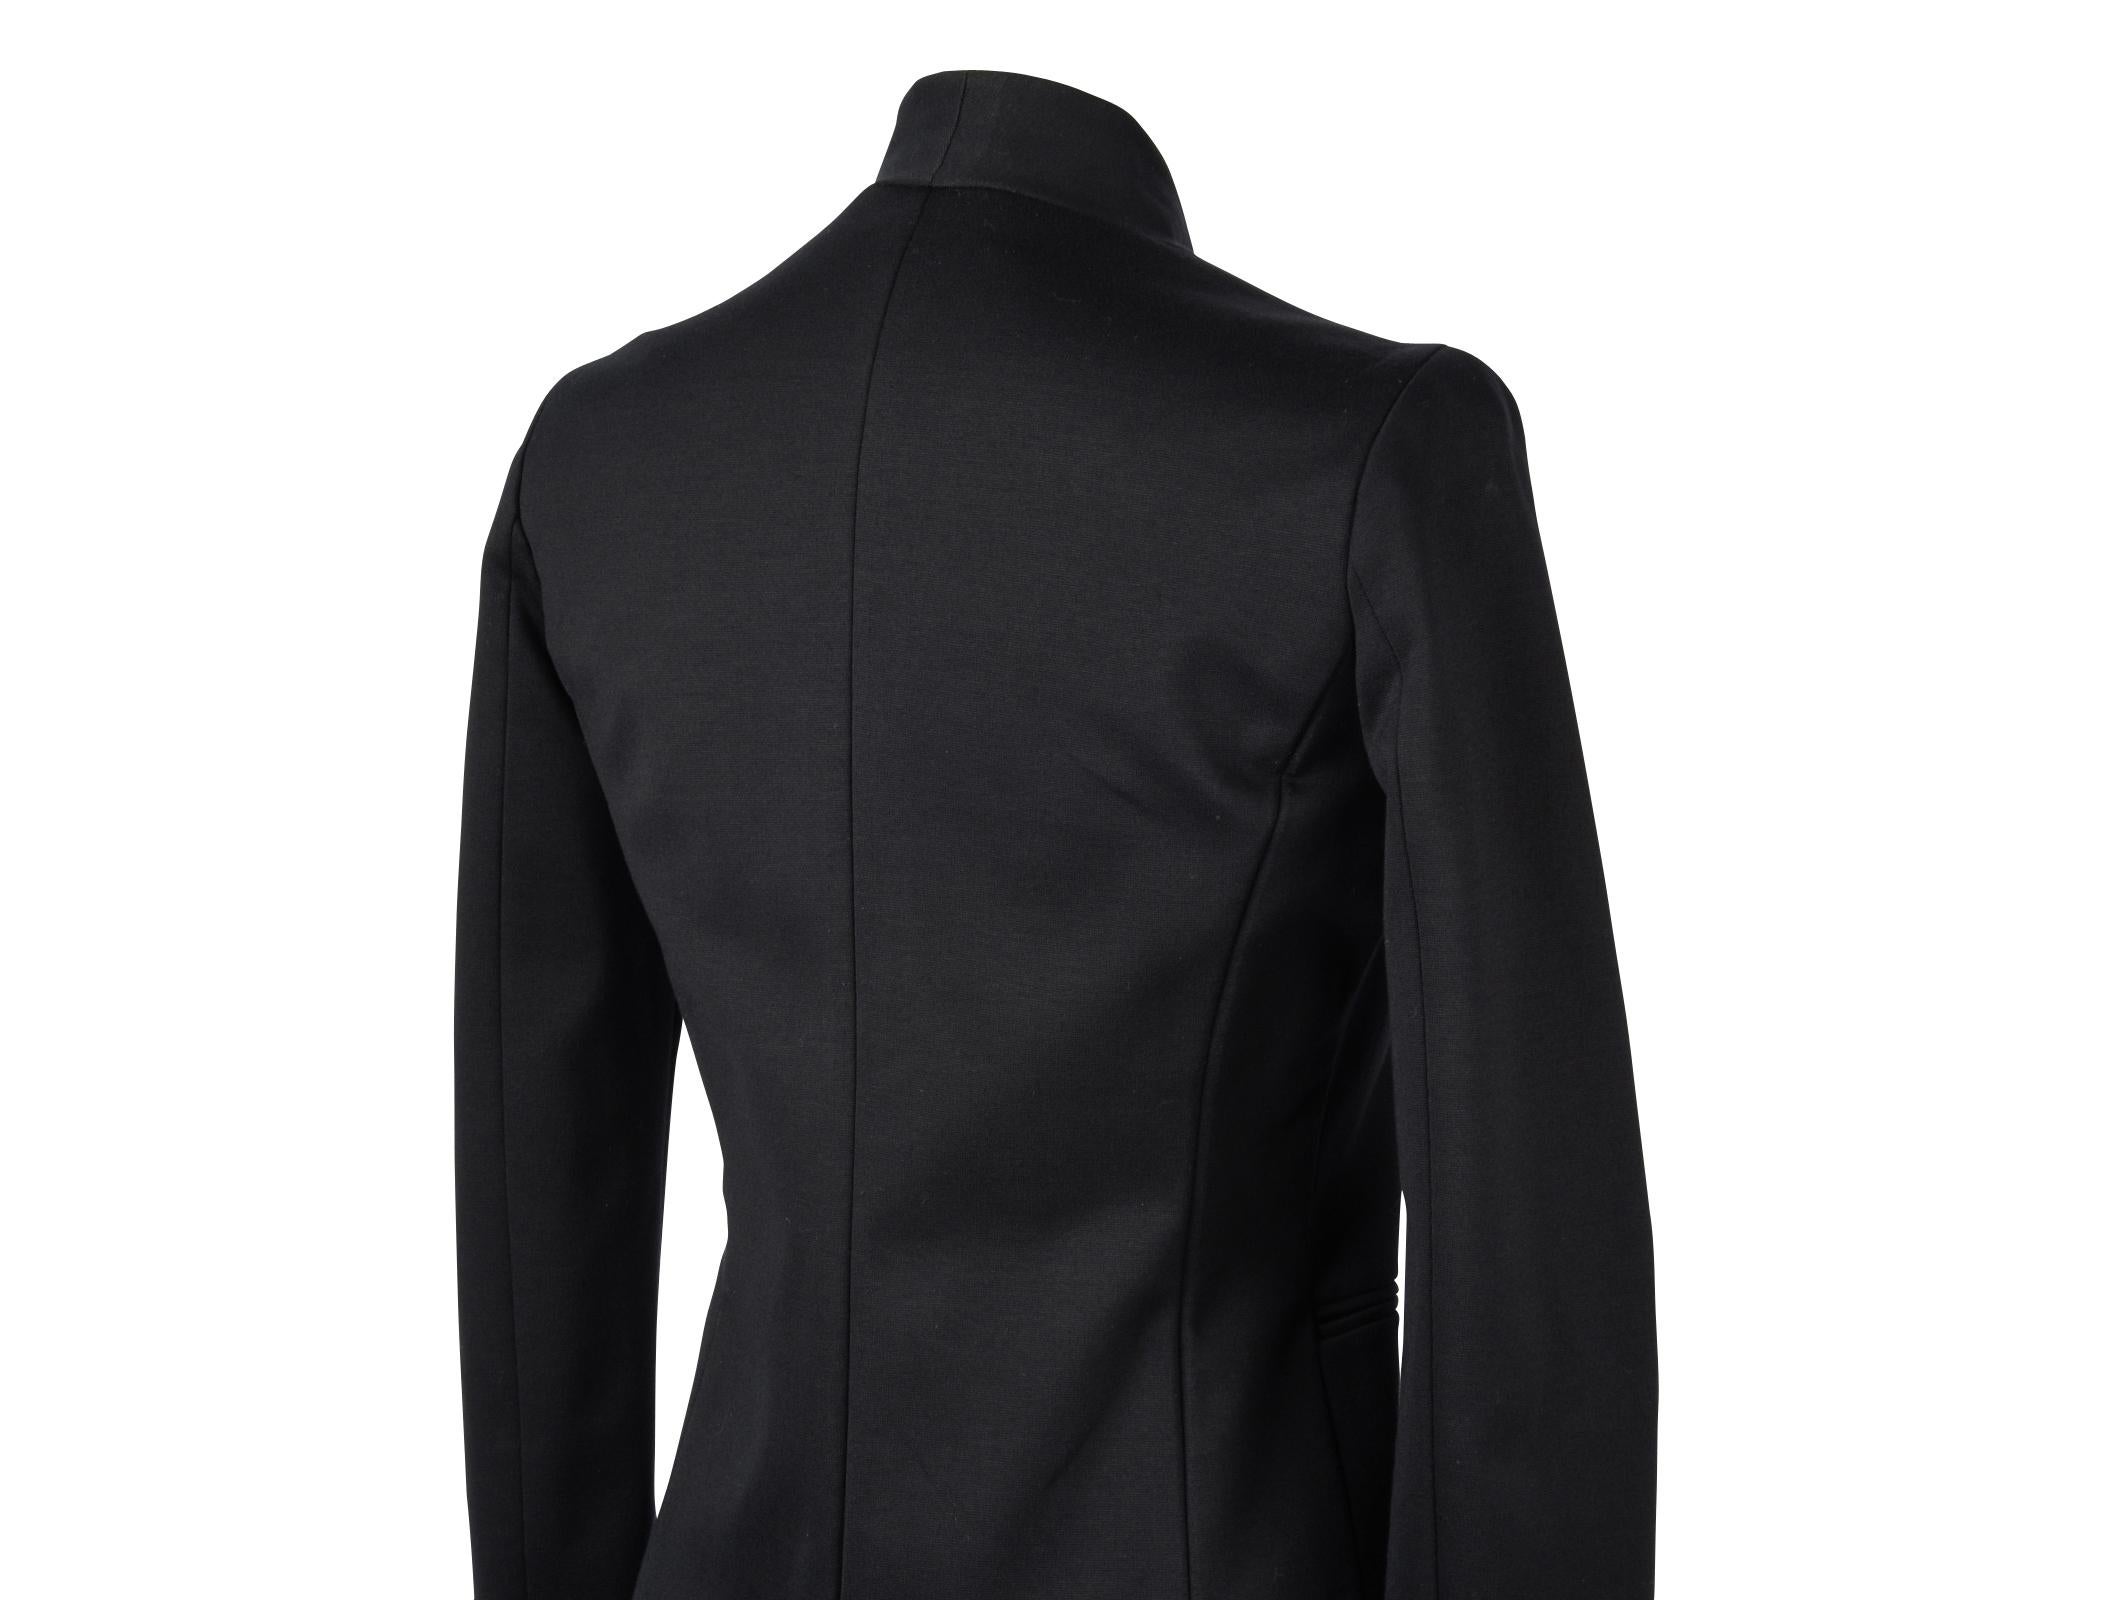 Gucci Jacket Modern Sleek Black Single Breast 38 / 6  5